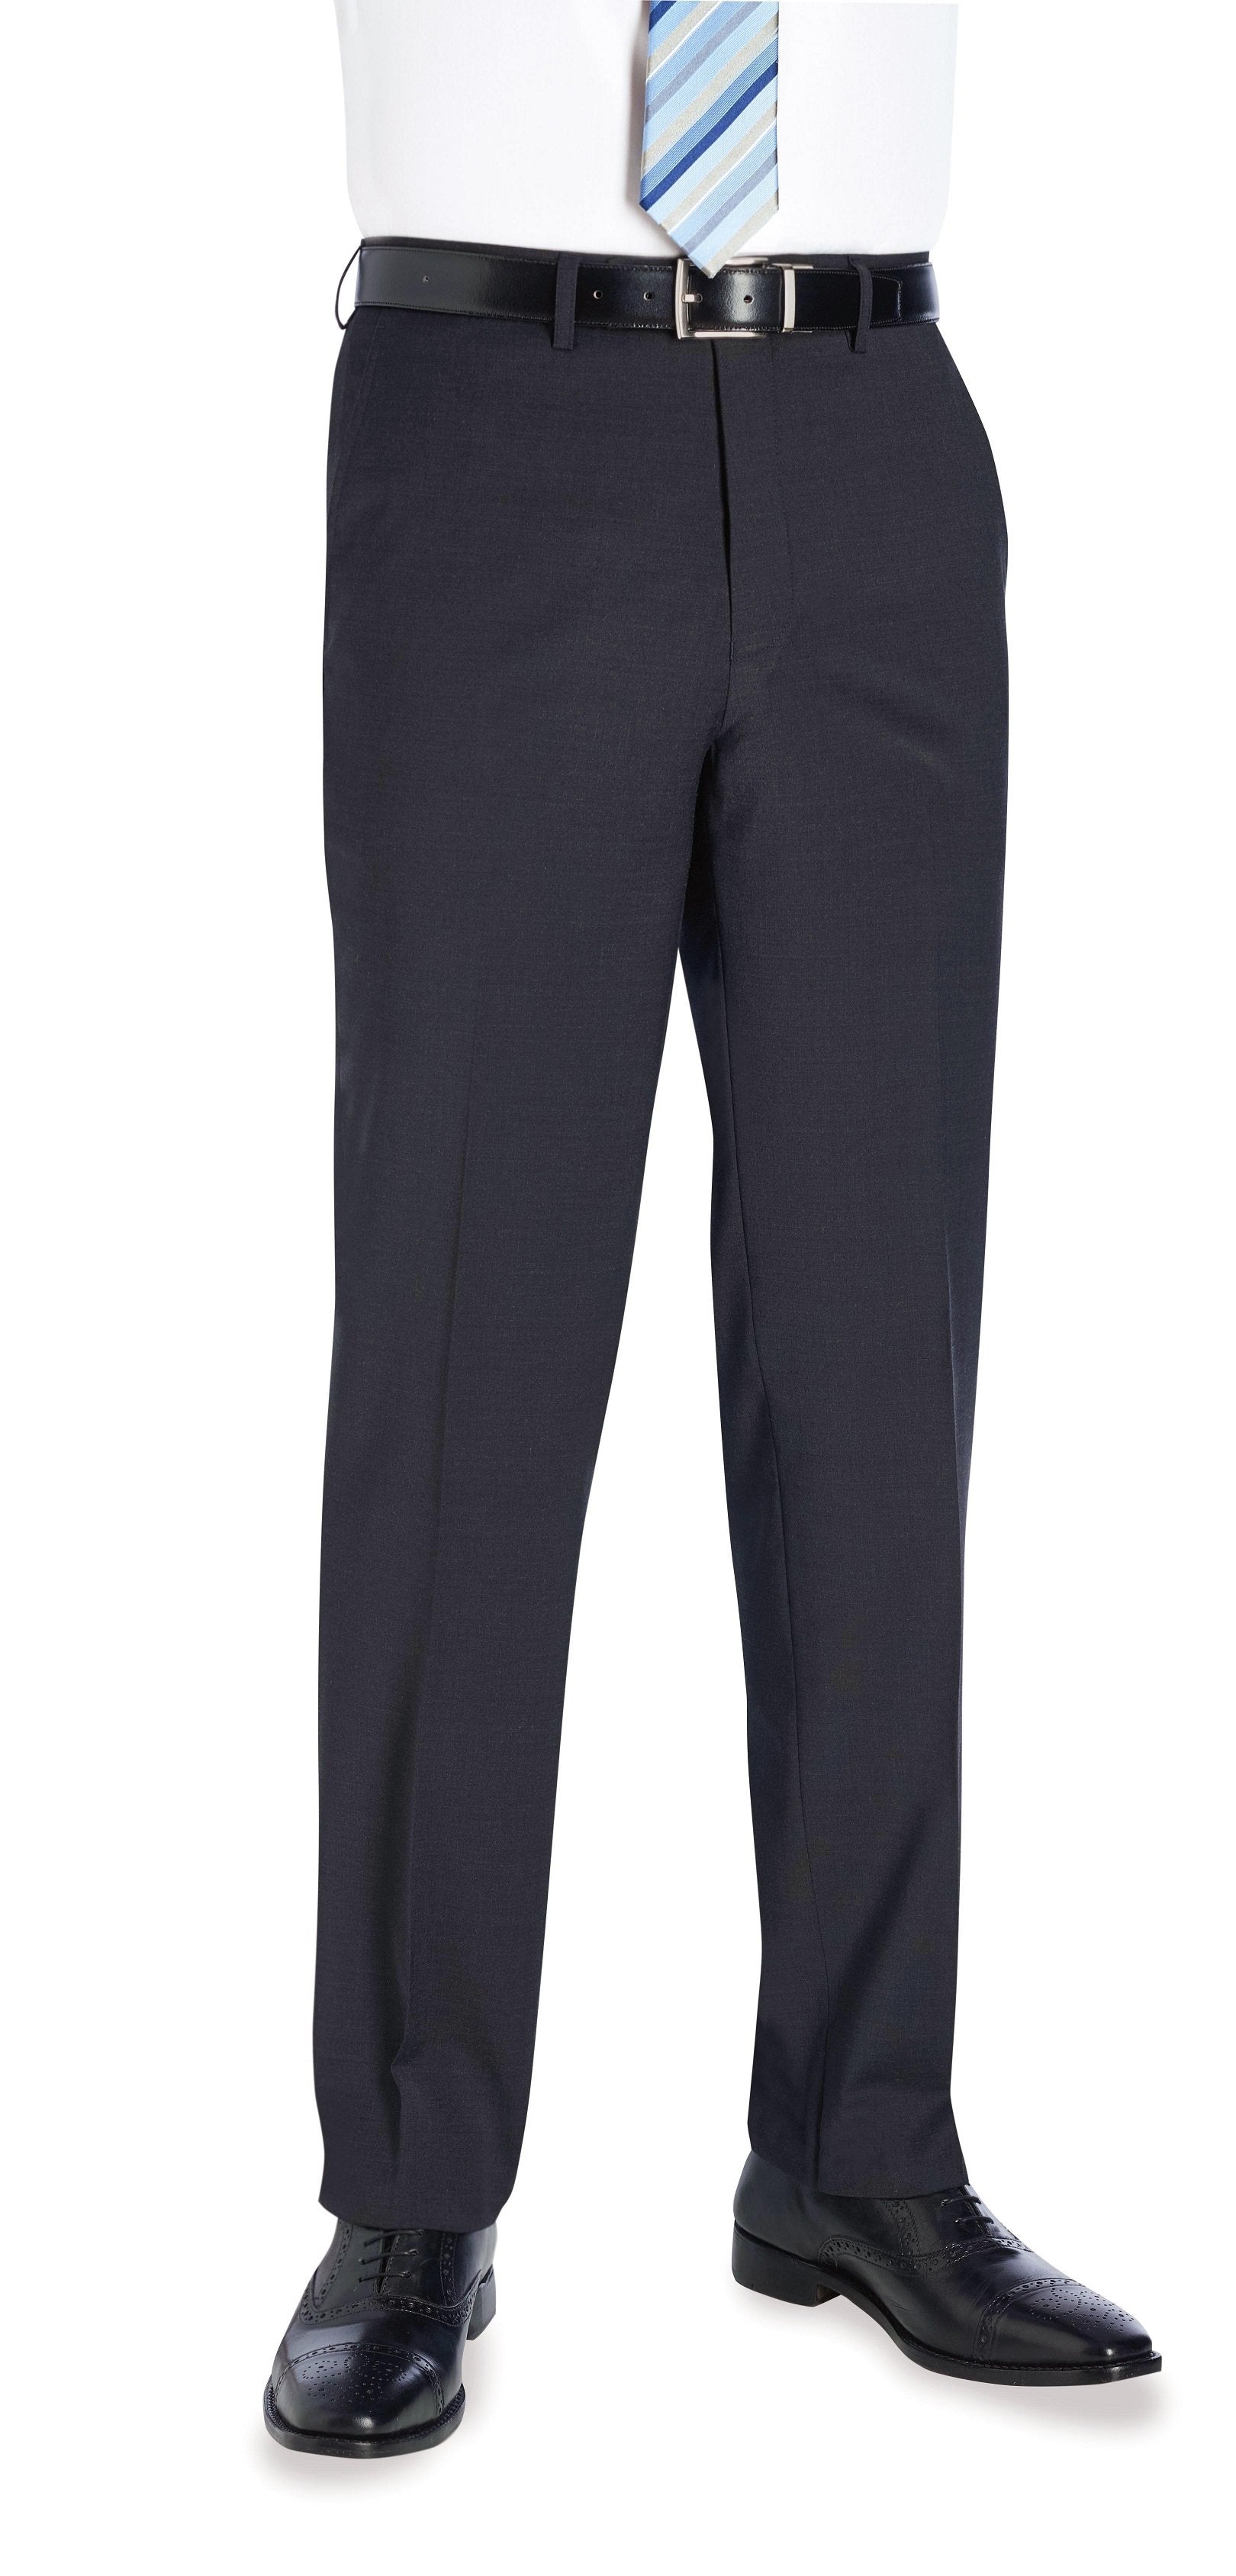 Fabian Slim Fit Pants, Grey Check- Luxury business casual pants –  Ackermann's Apparel